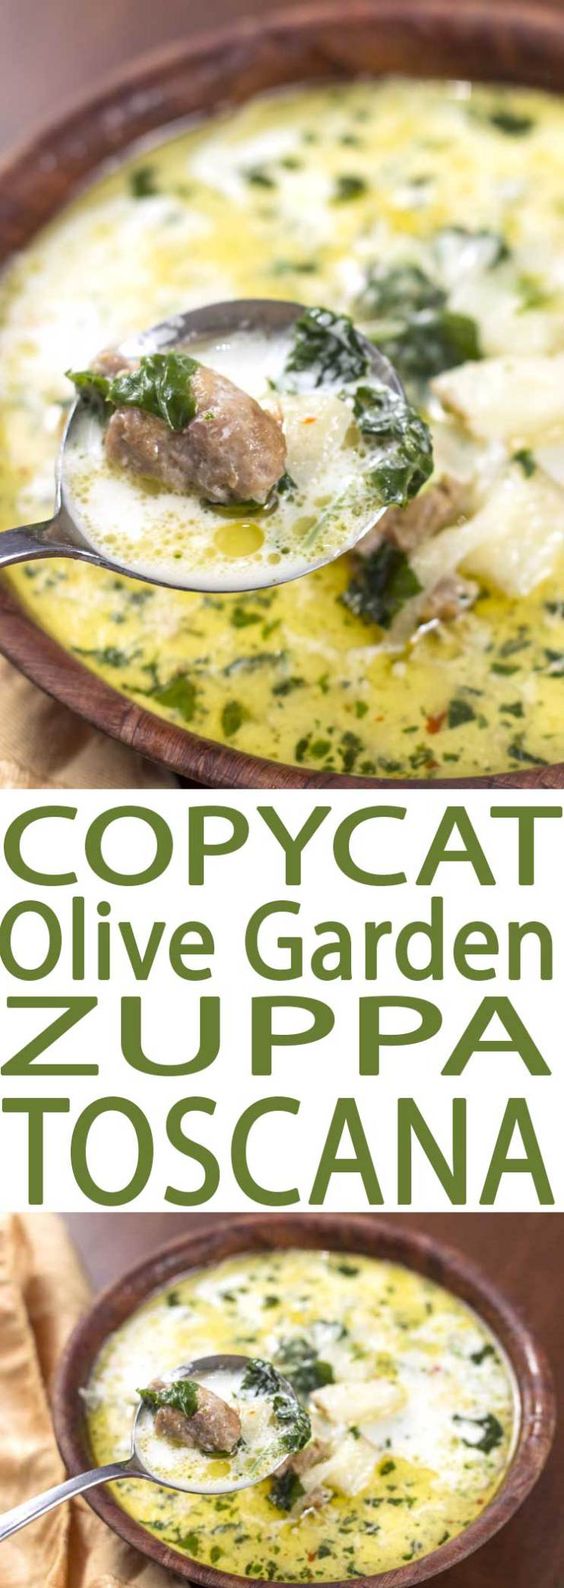 Copycat Olive Garden Zuppa Toscana Soup | CUCINA DE YUNG